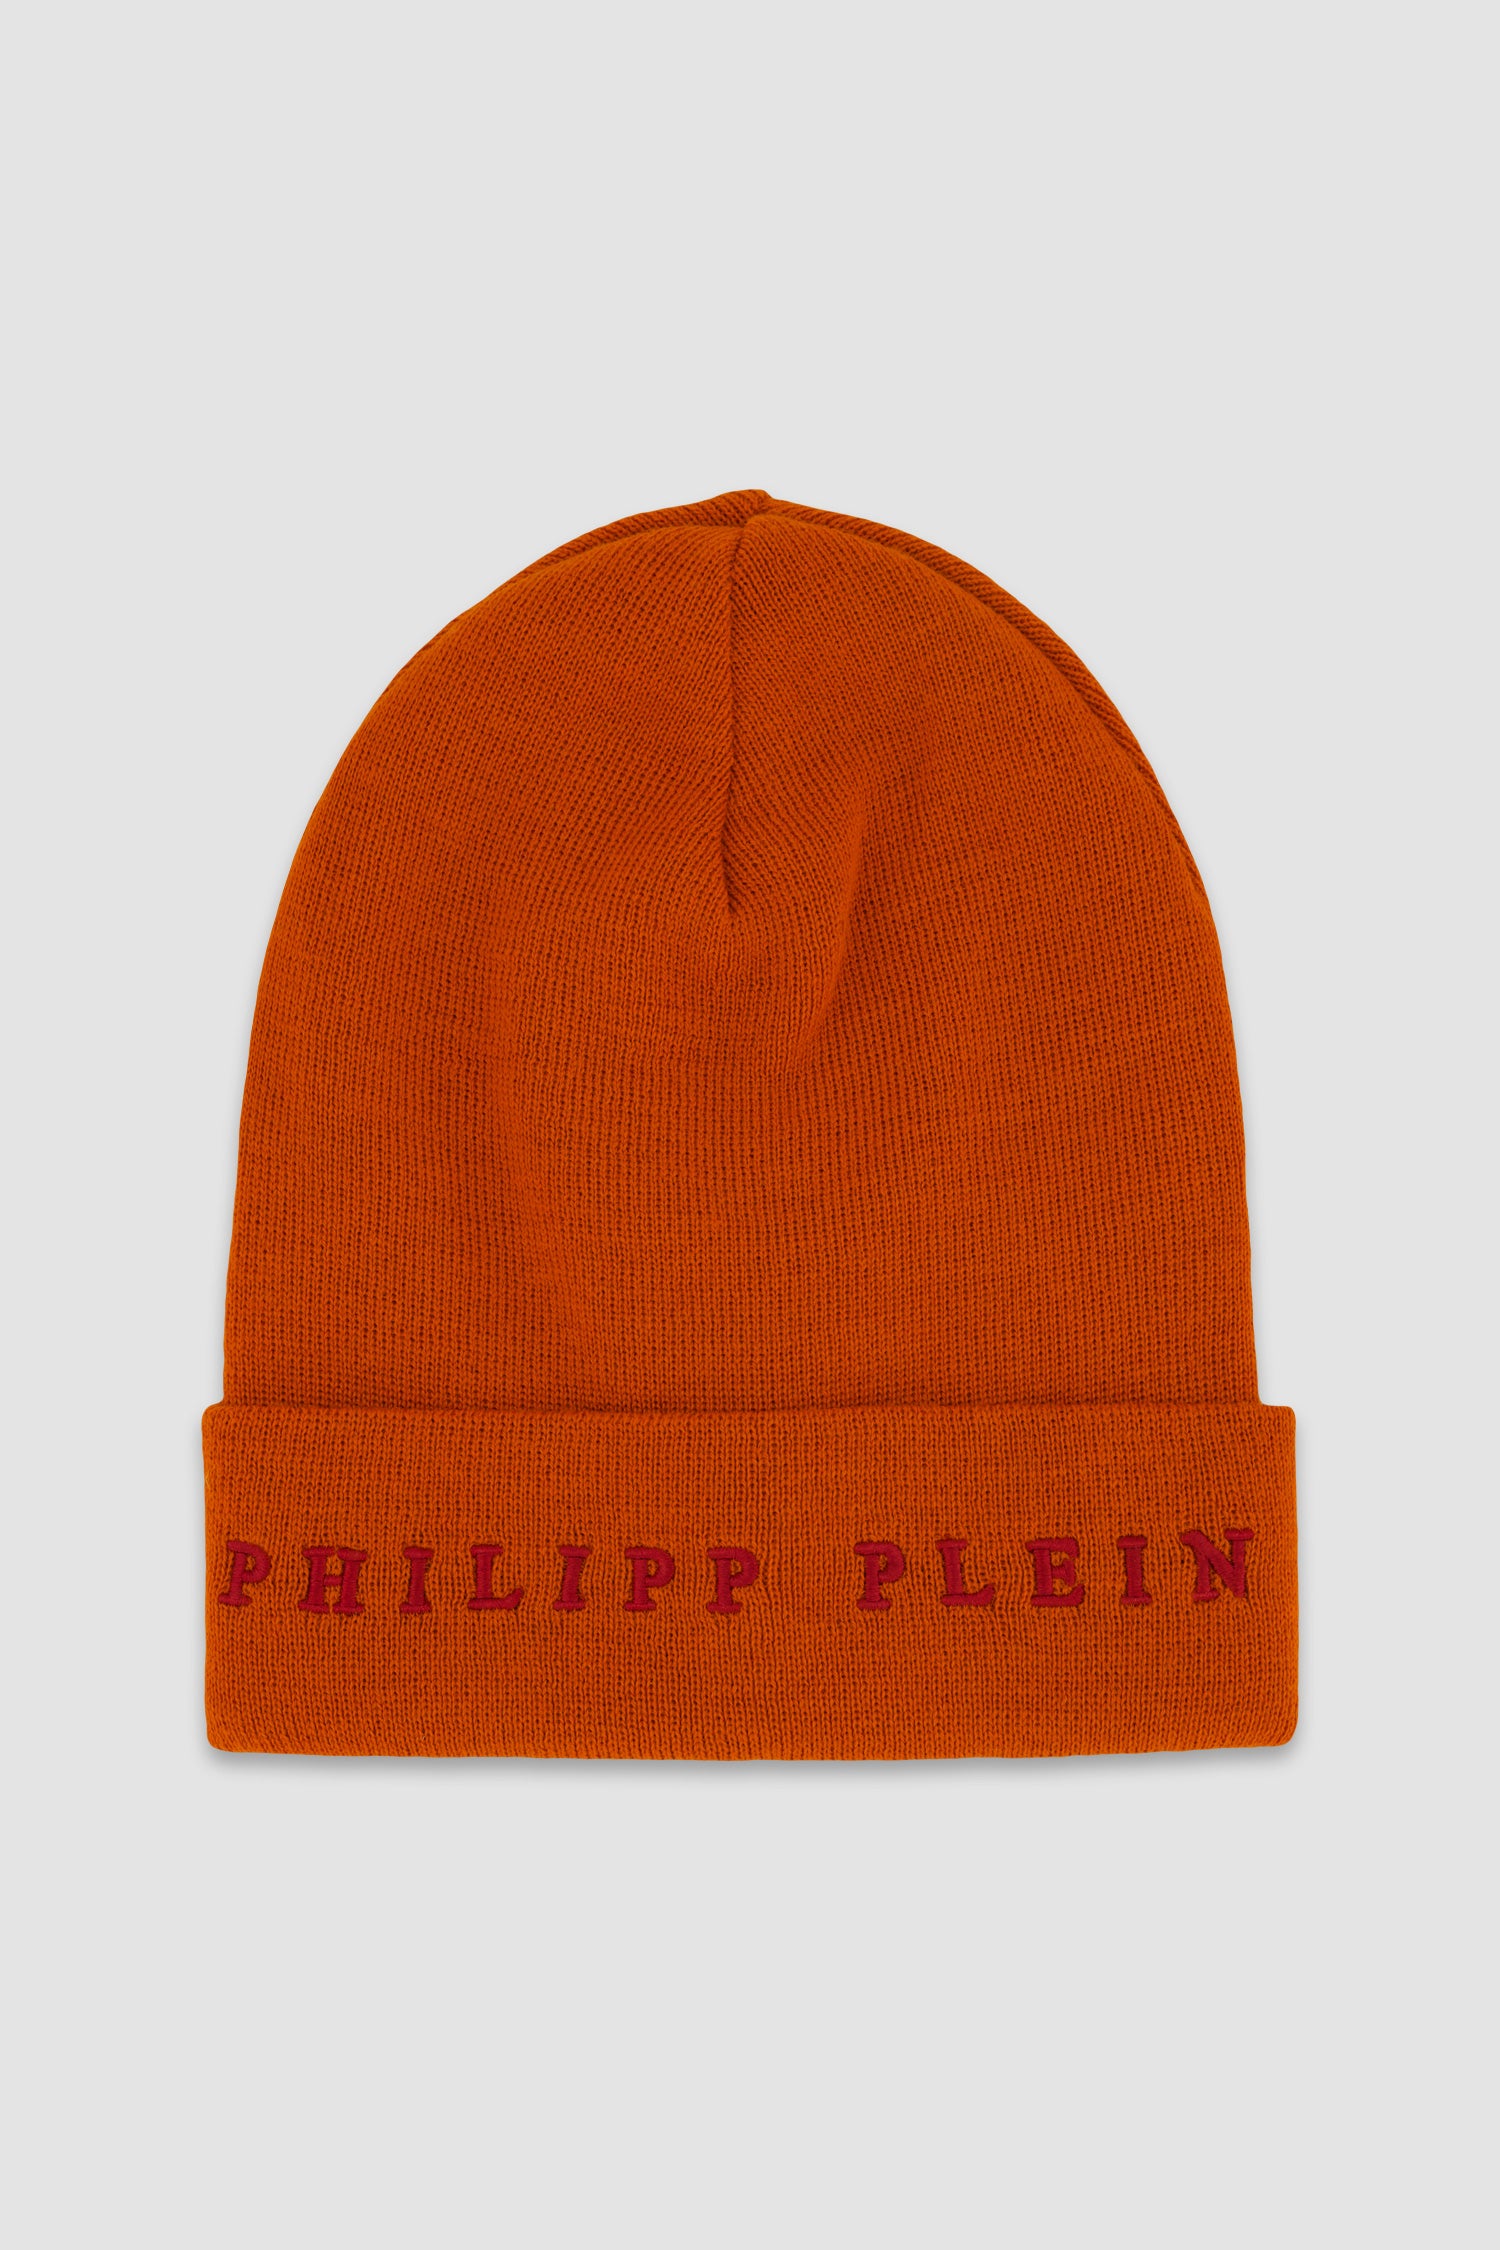 Philipp Plein Orange Hat